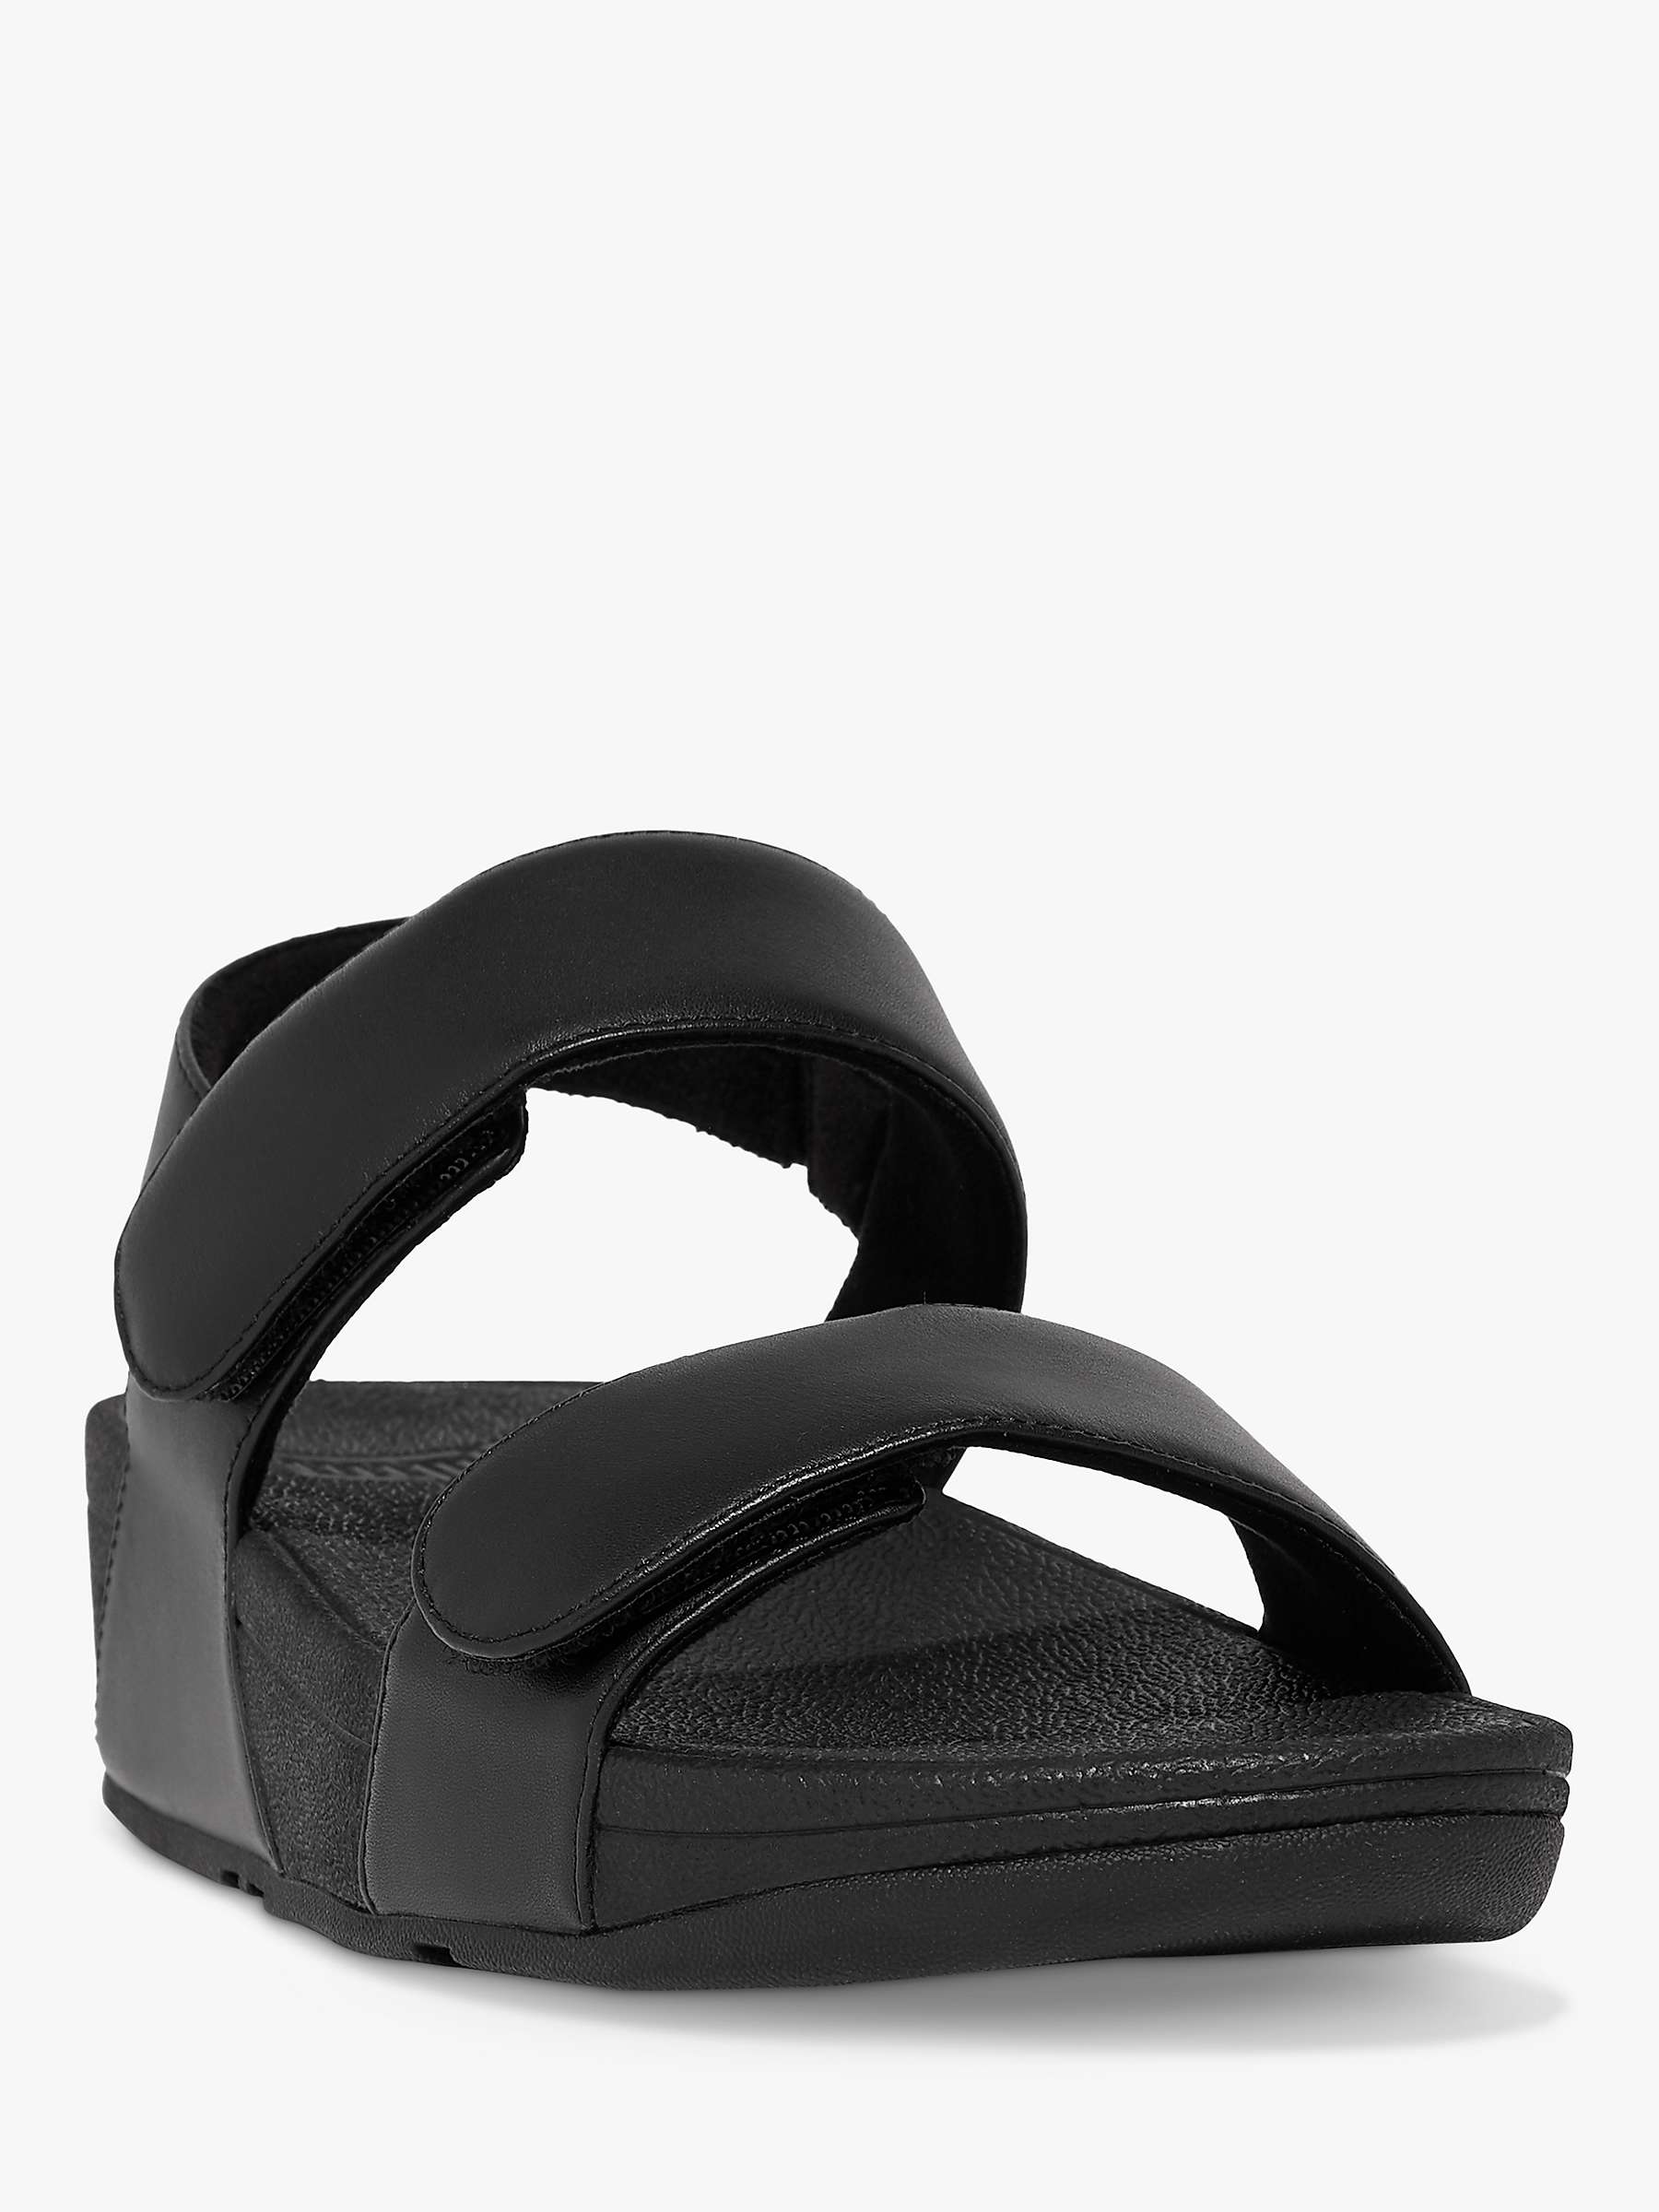 Buy FitFlop Lulu Adjustable Strap Leather Sandals Online at johnlewis.com